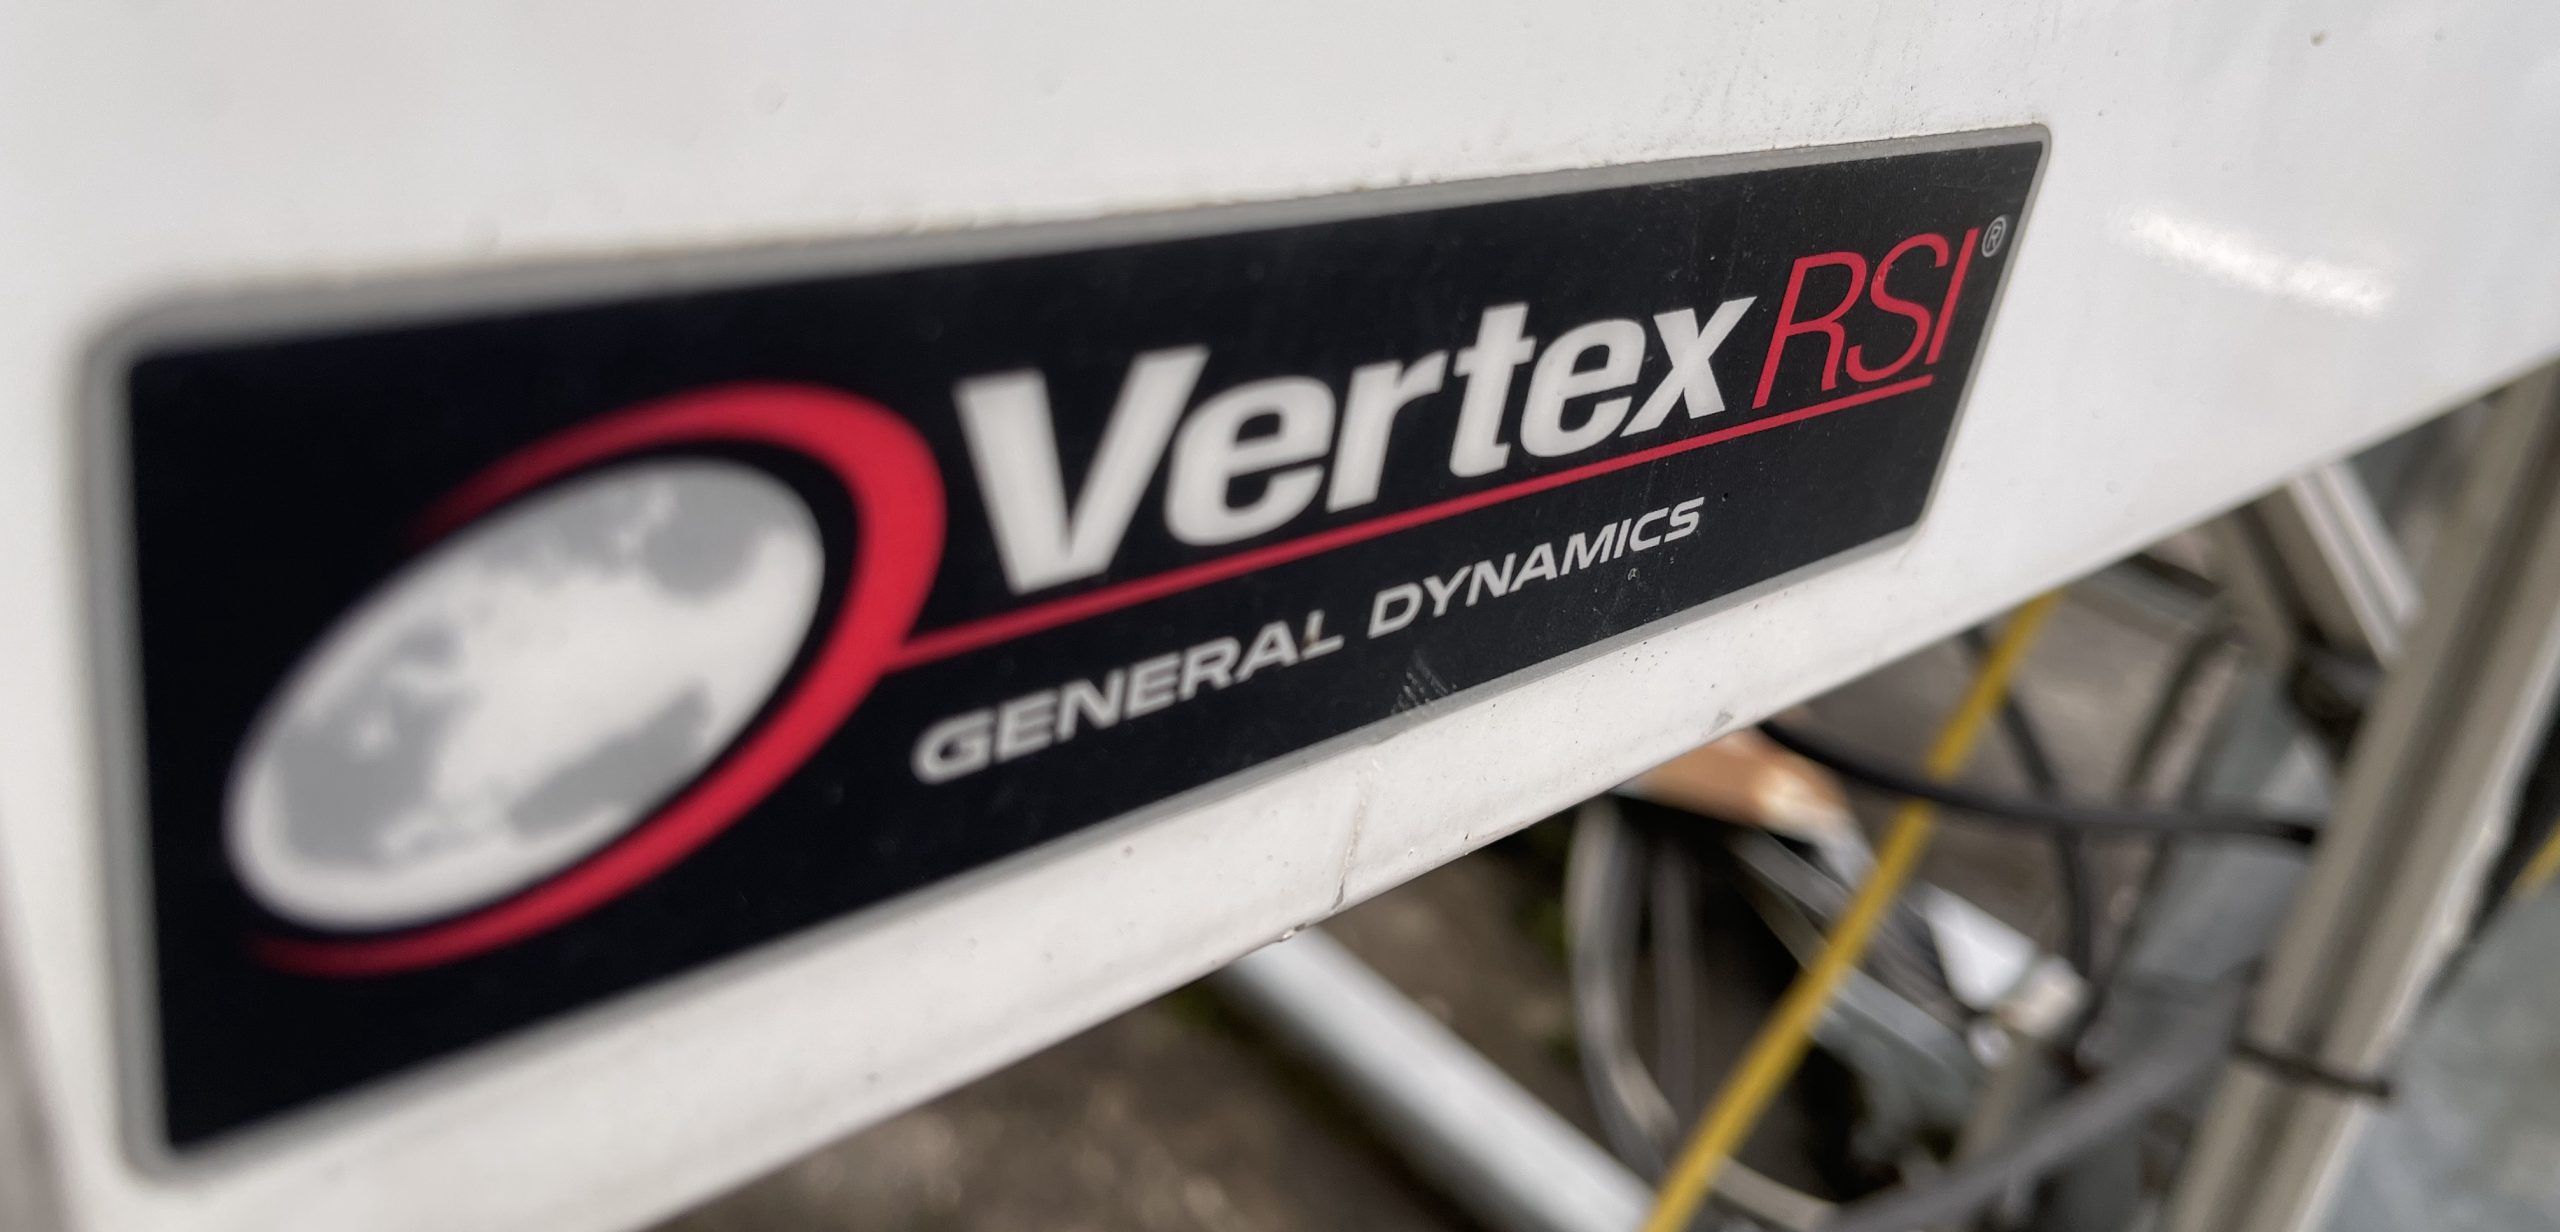 VertexRSI (General Dynamics) logo portait